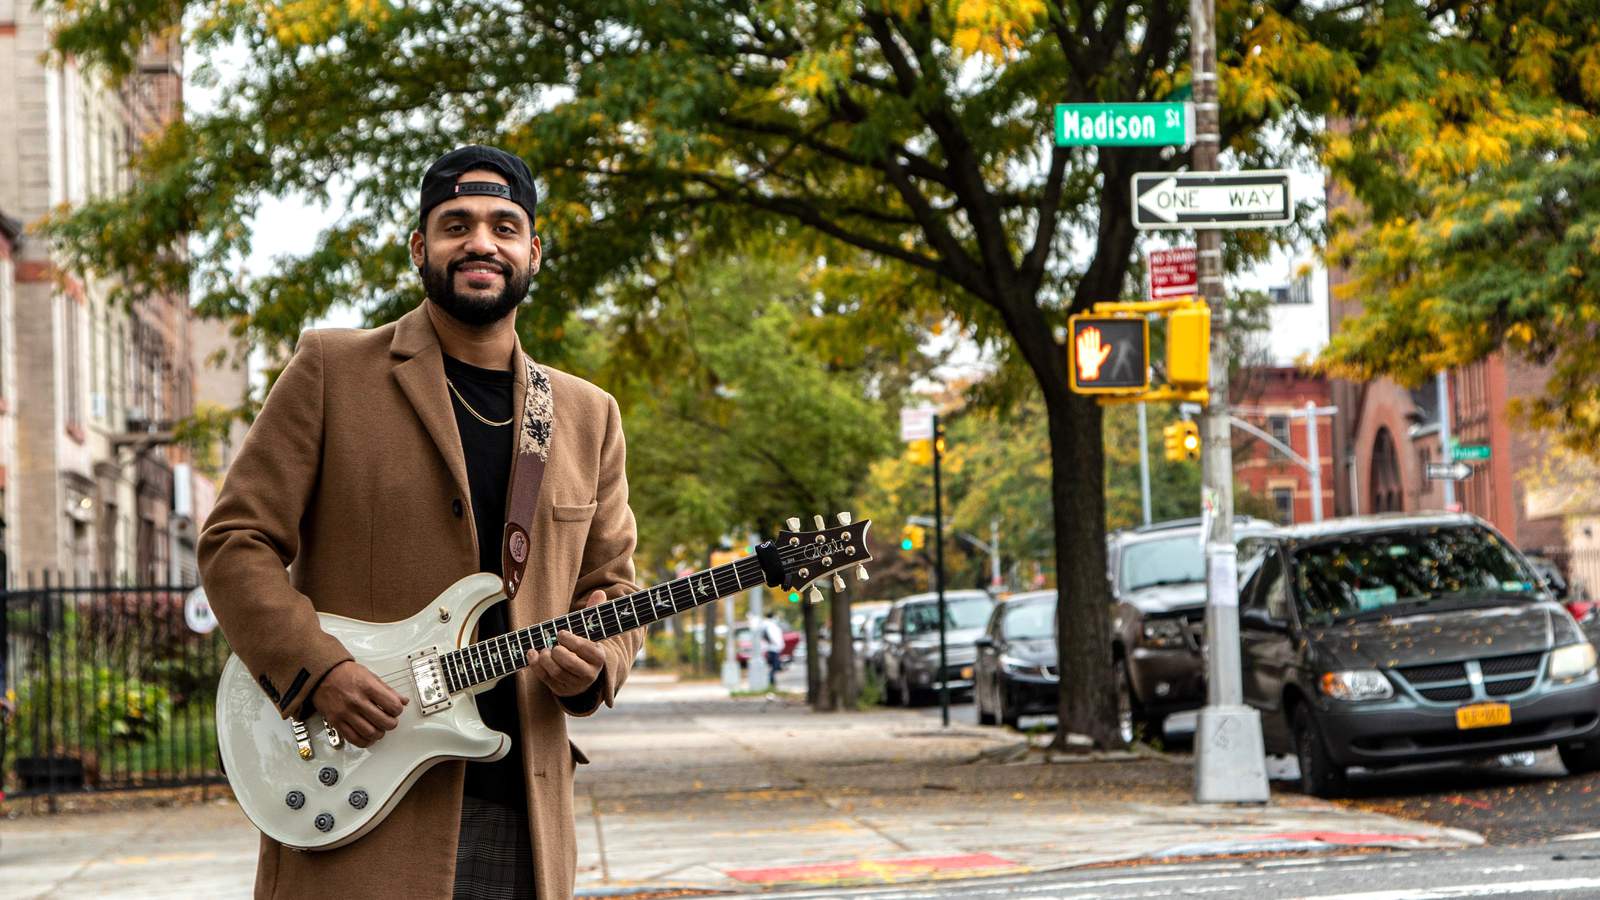 Ricardo Ramos posing with his guitar in Brooklyn NY